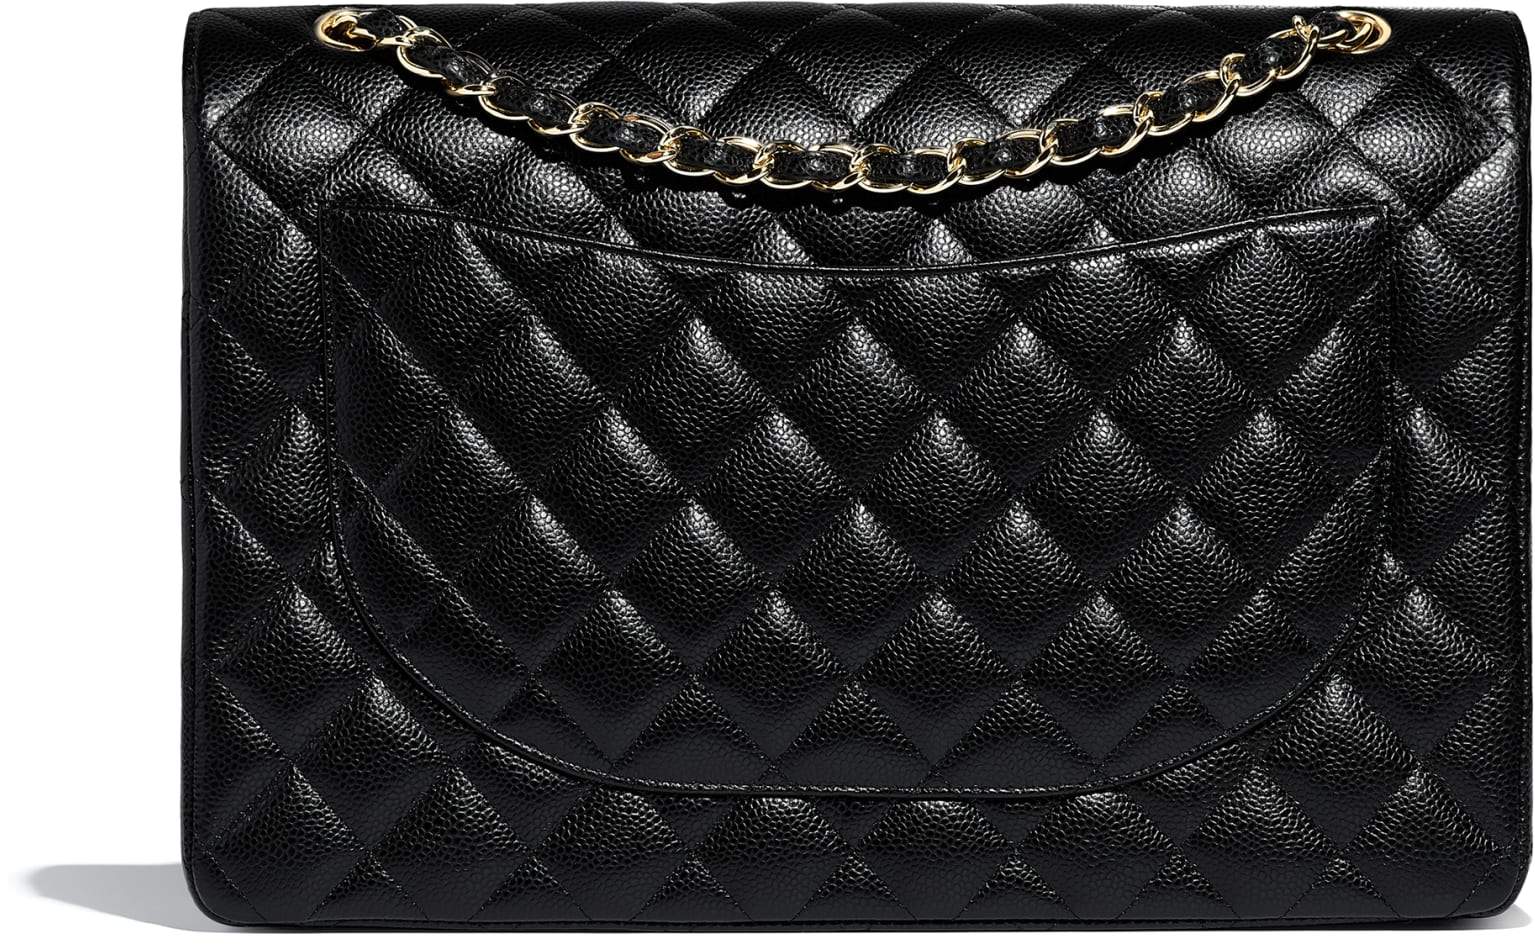 Chanel Classic Maxi Handbag Black Grained Calfskin Gold-Toned